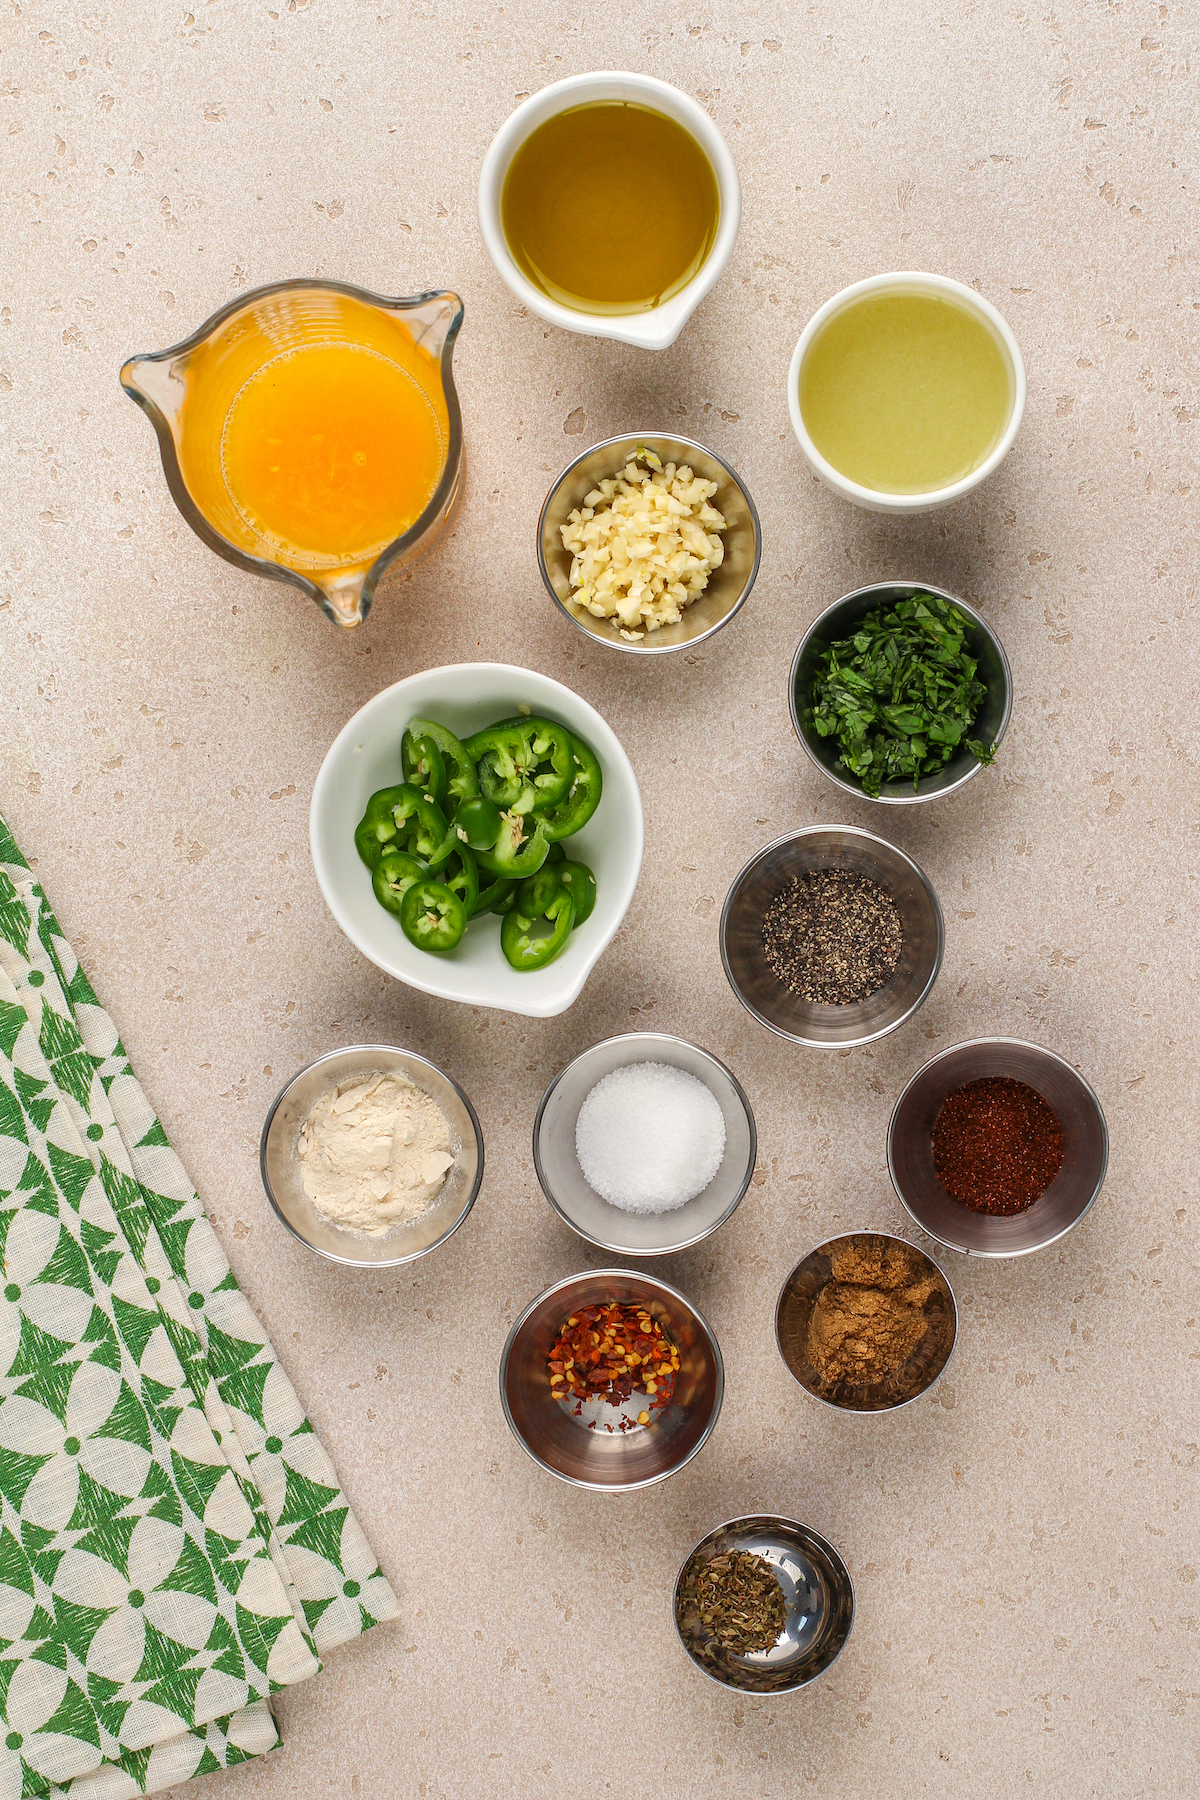 Ingredients for chicken fajita marinade, arranged on a table.